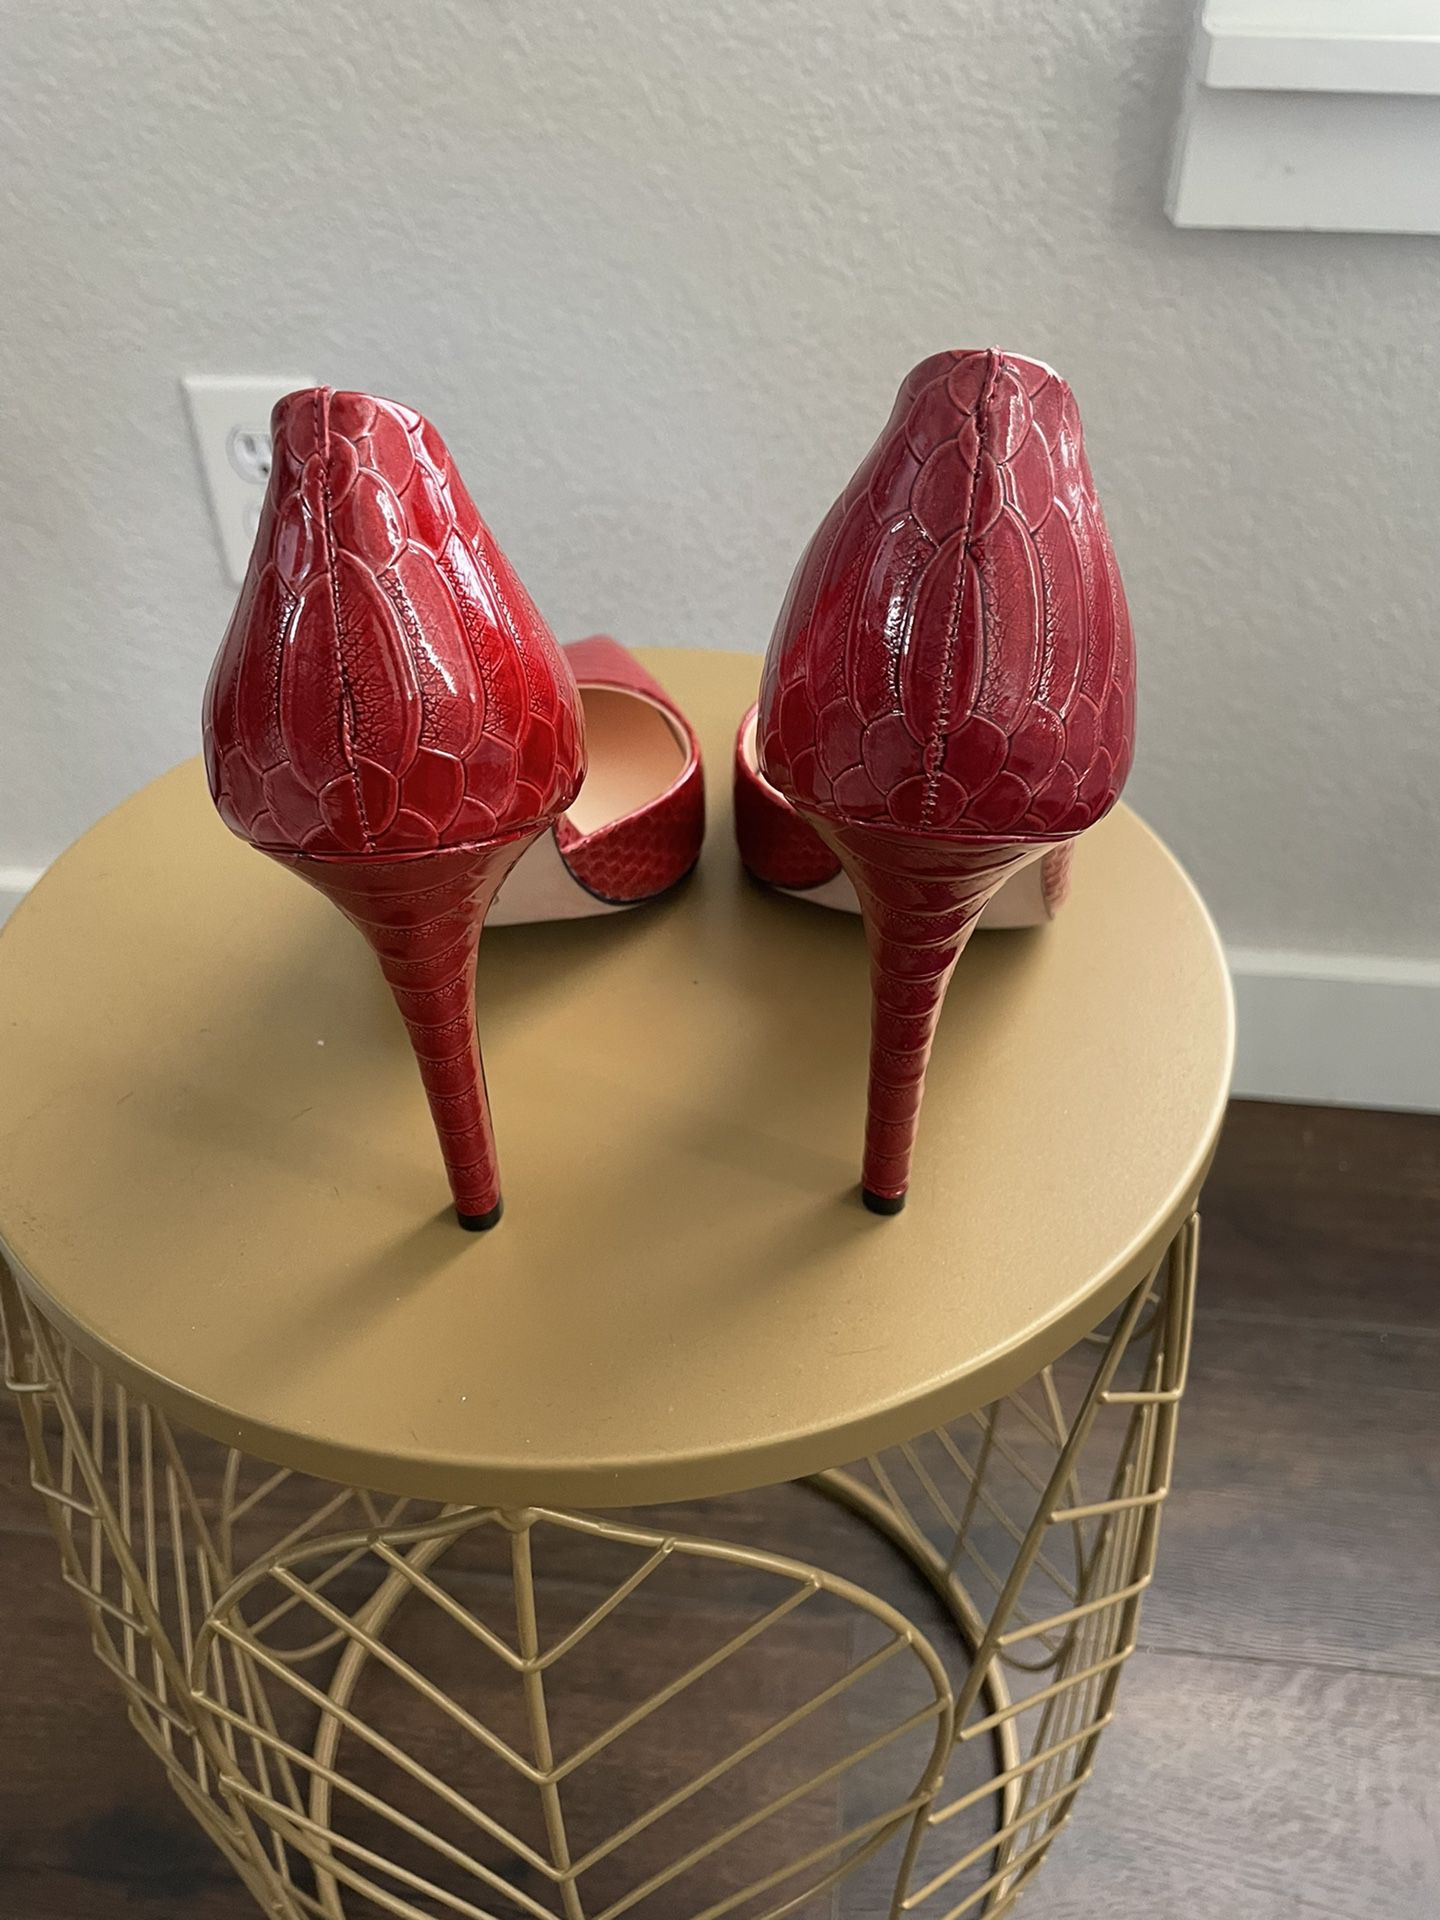 Jessica Simpson- Red Heels Size 8